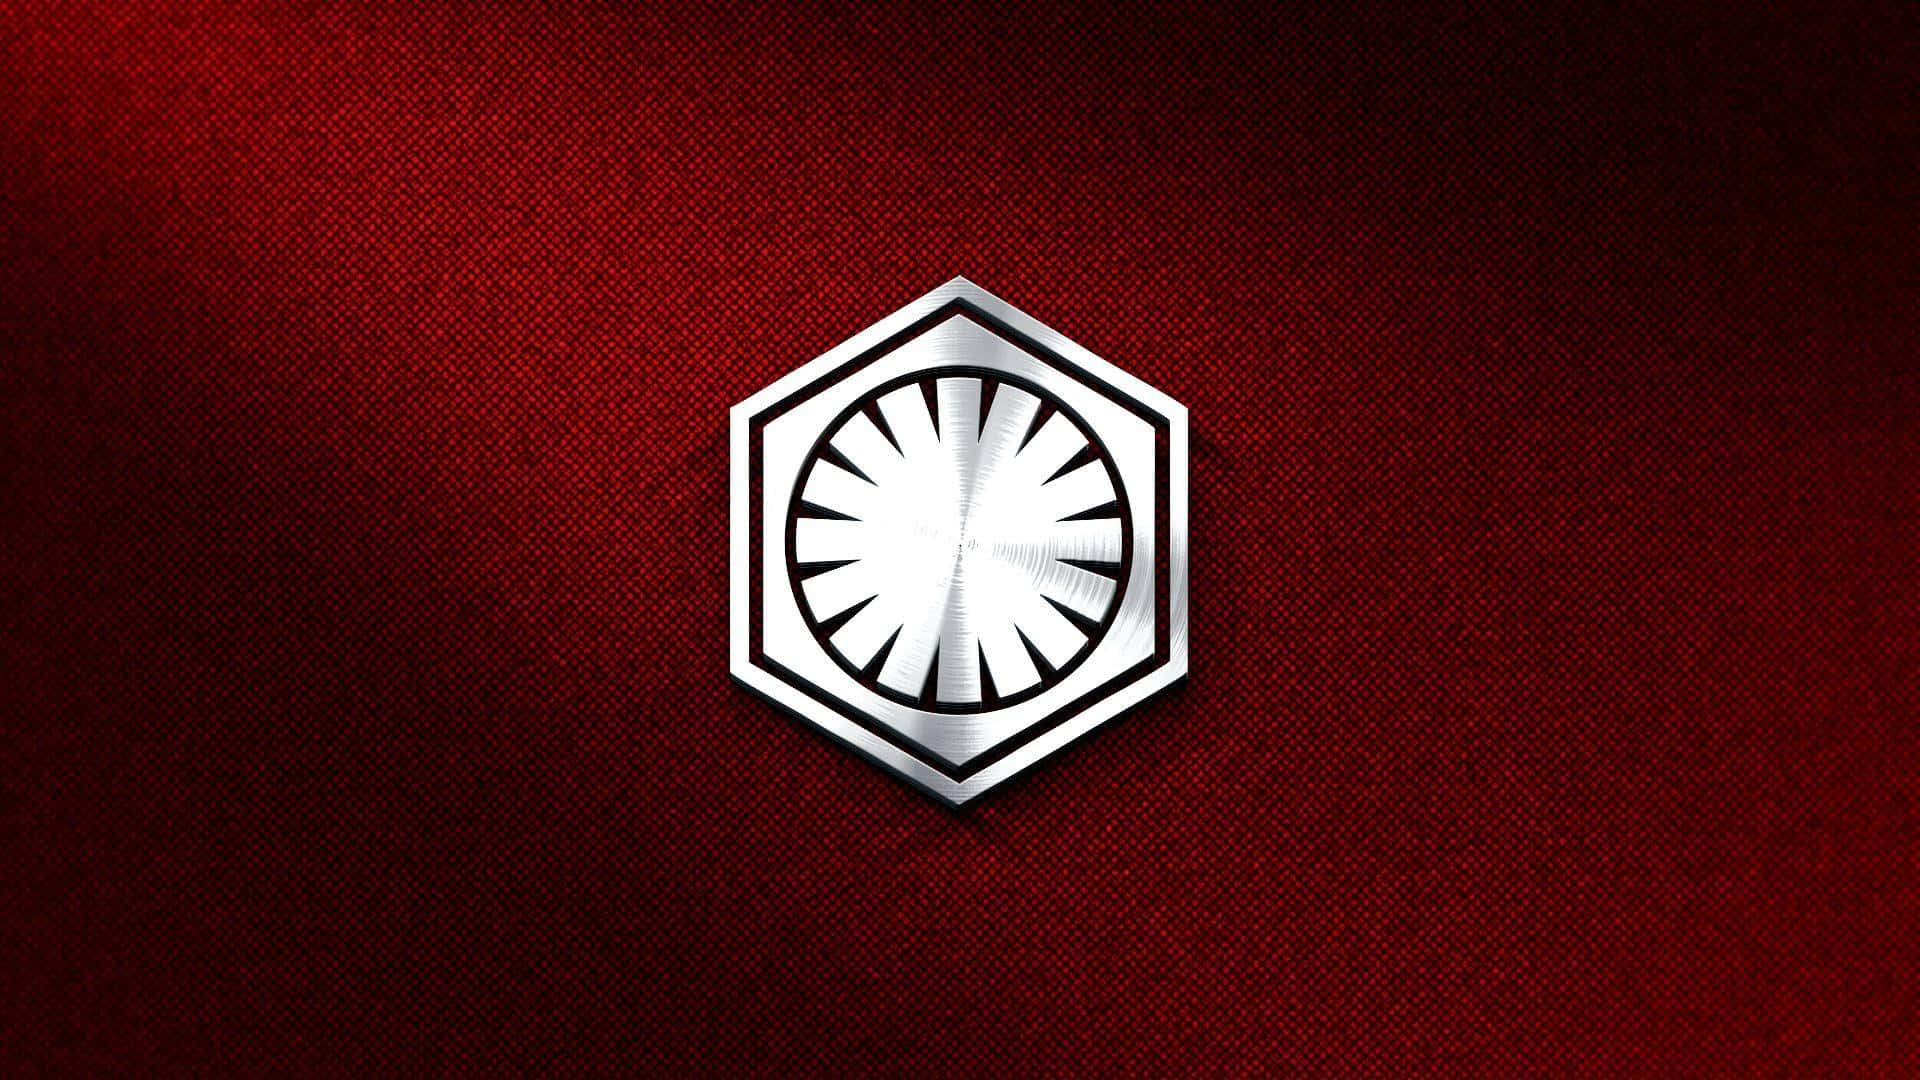 Umlogotipo Representando O Império Galáctico Na Trilogia Star Wars Papel de Parede